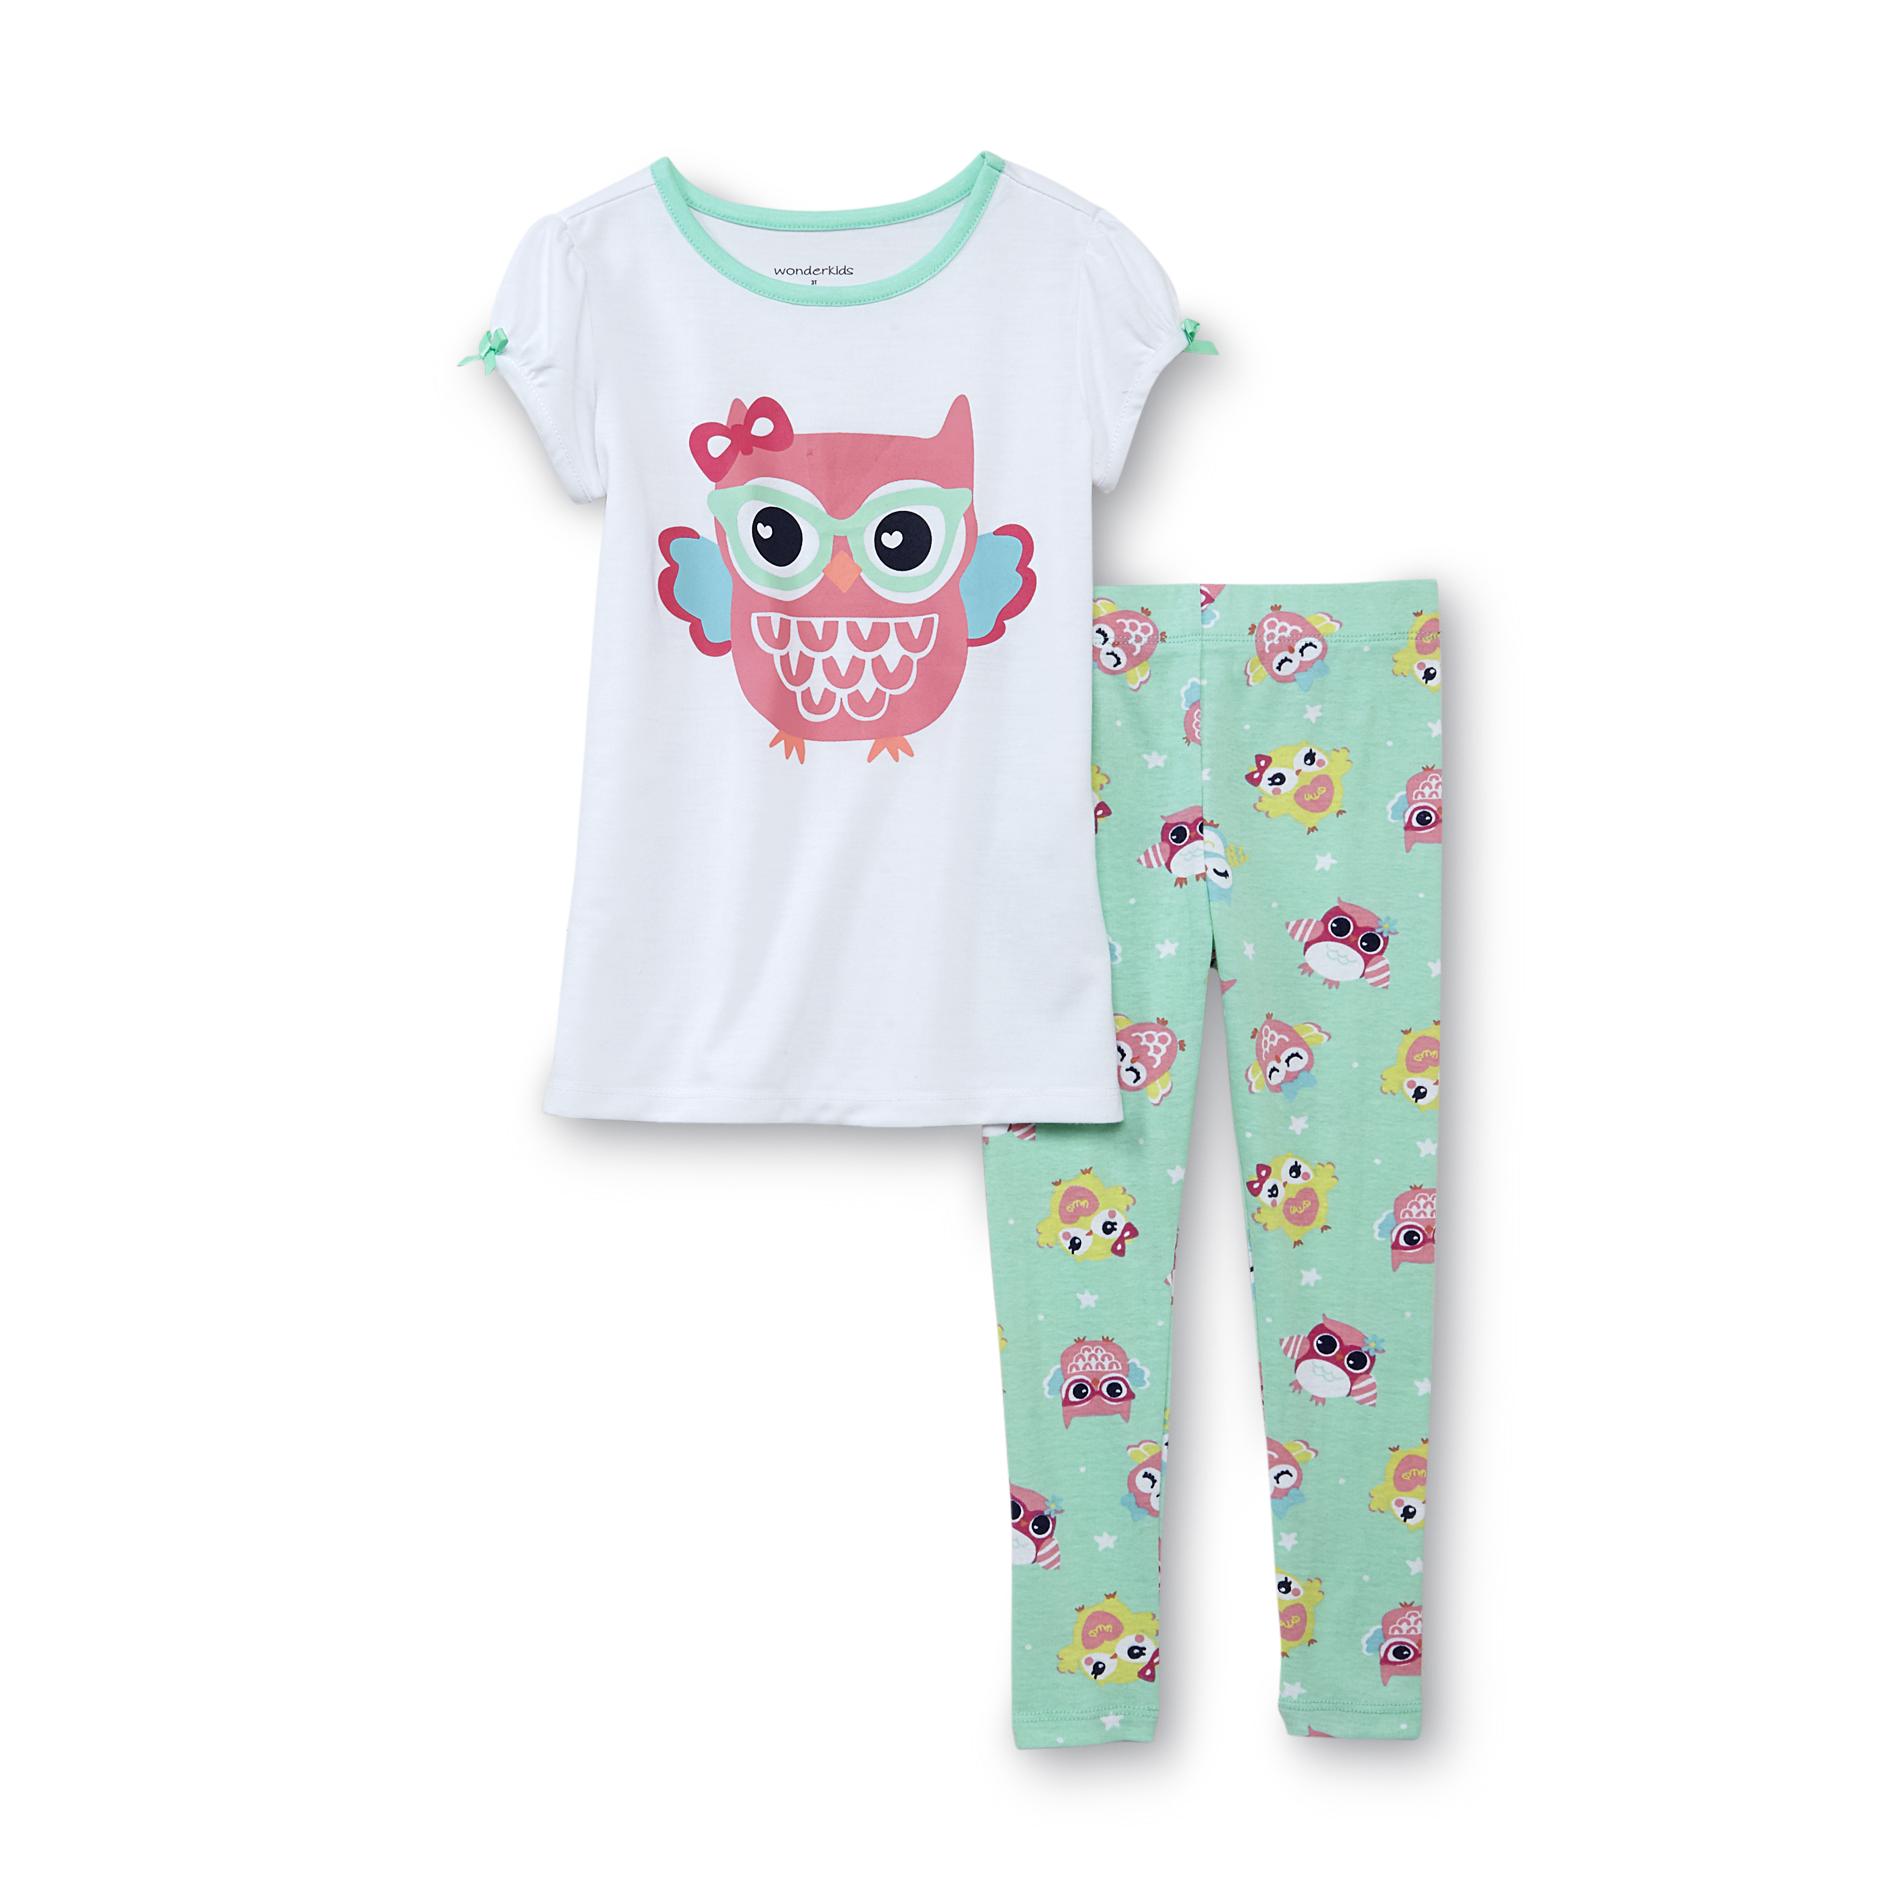 WonderKids Infant & Toddler Girl's Graphic Pajama Top & Pants - Owl